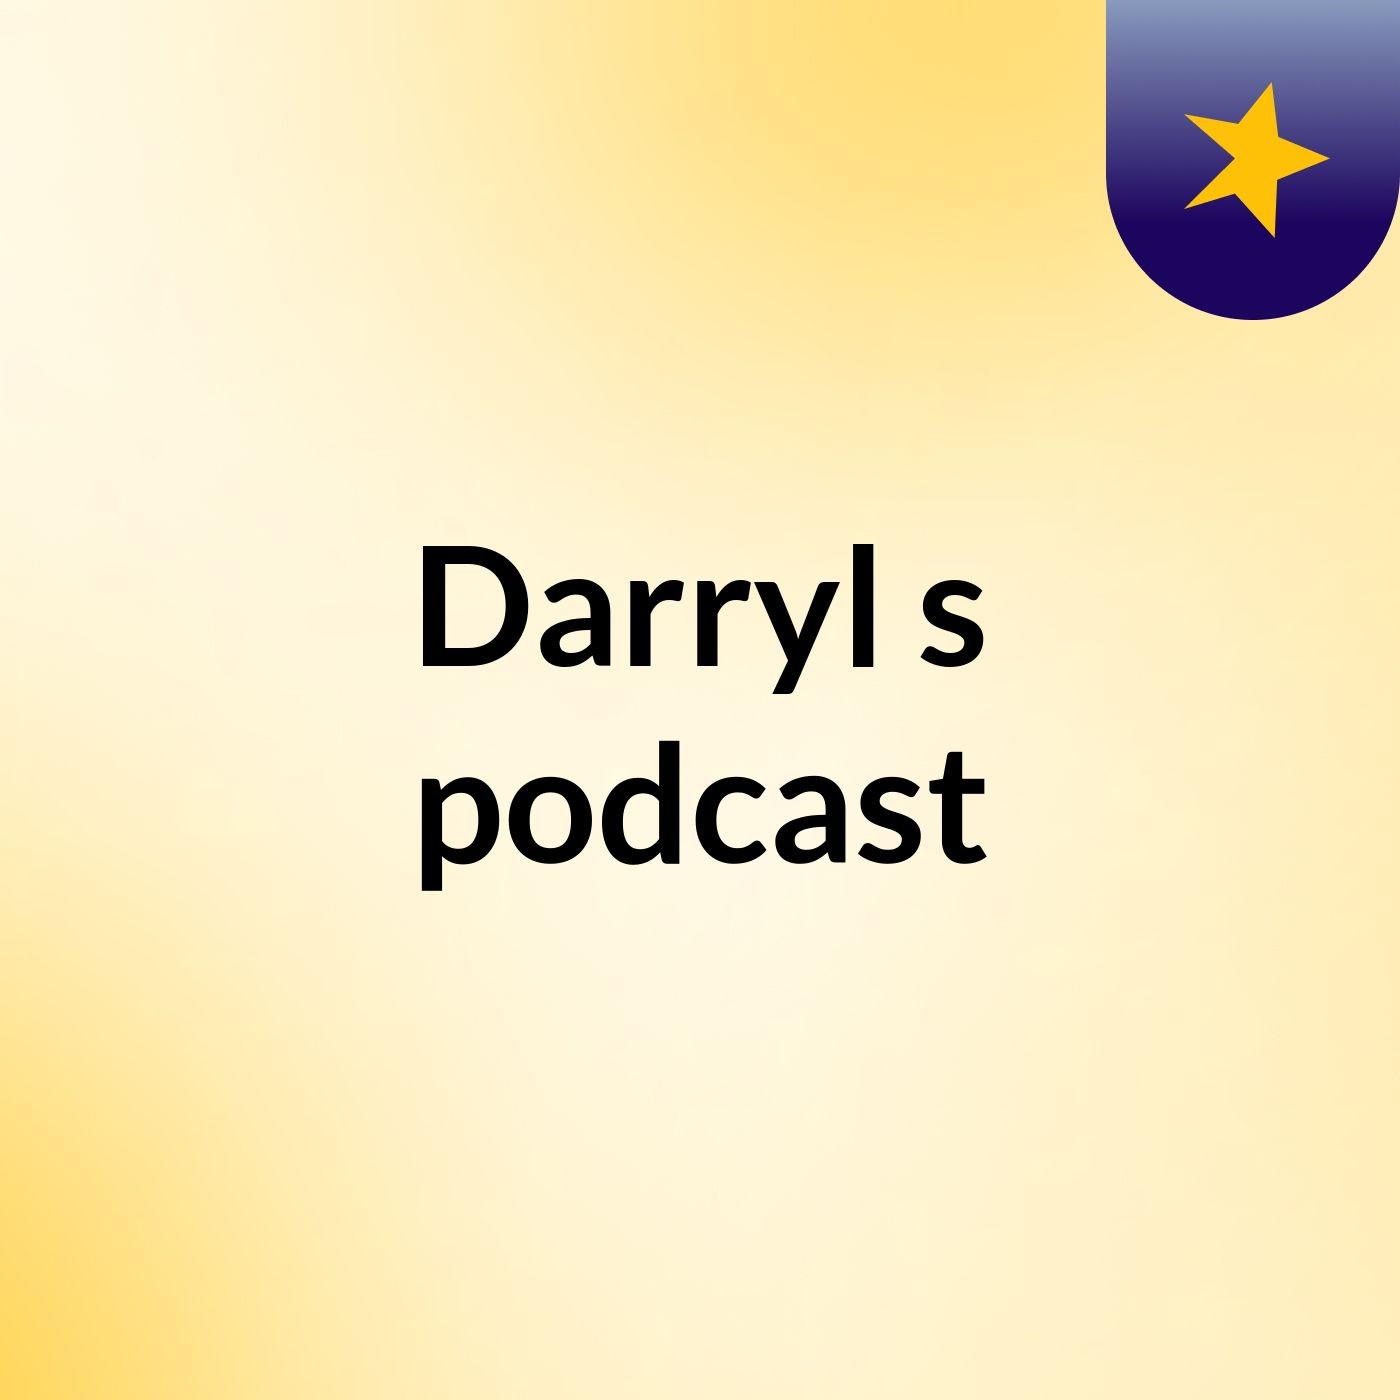 Darryl's podcast